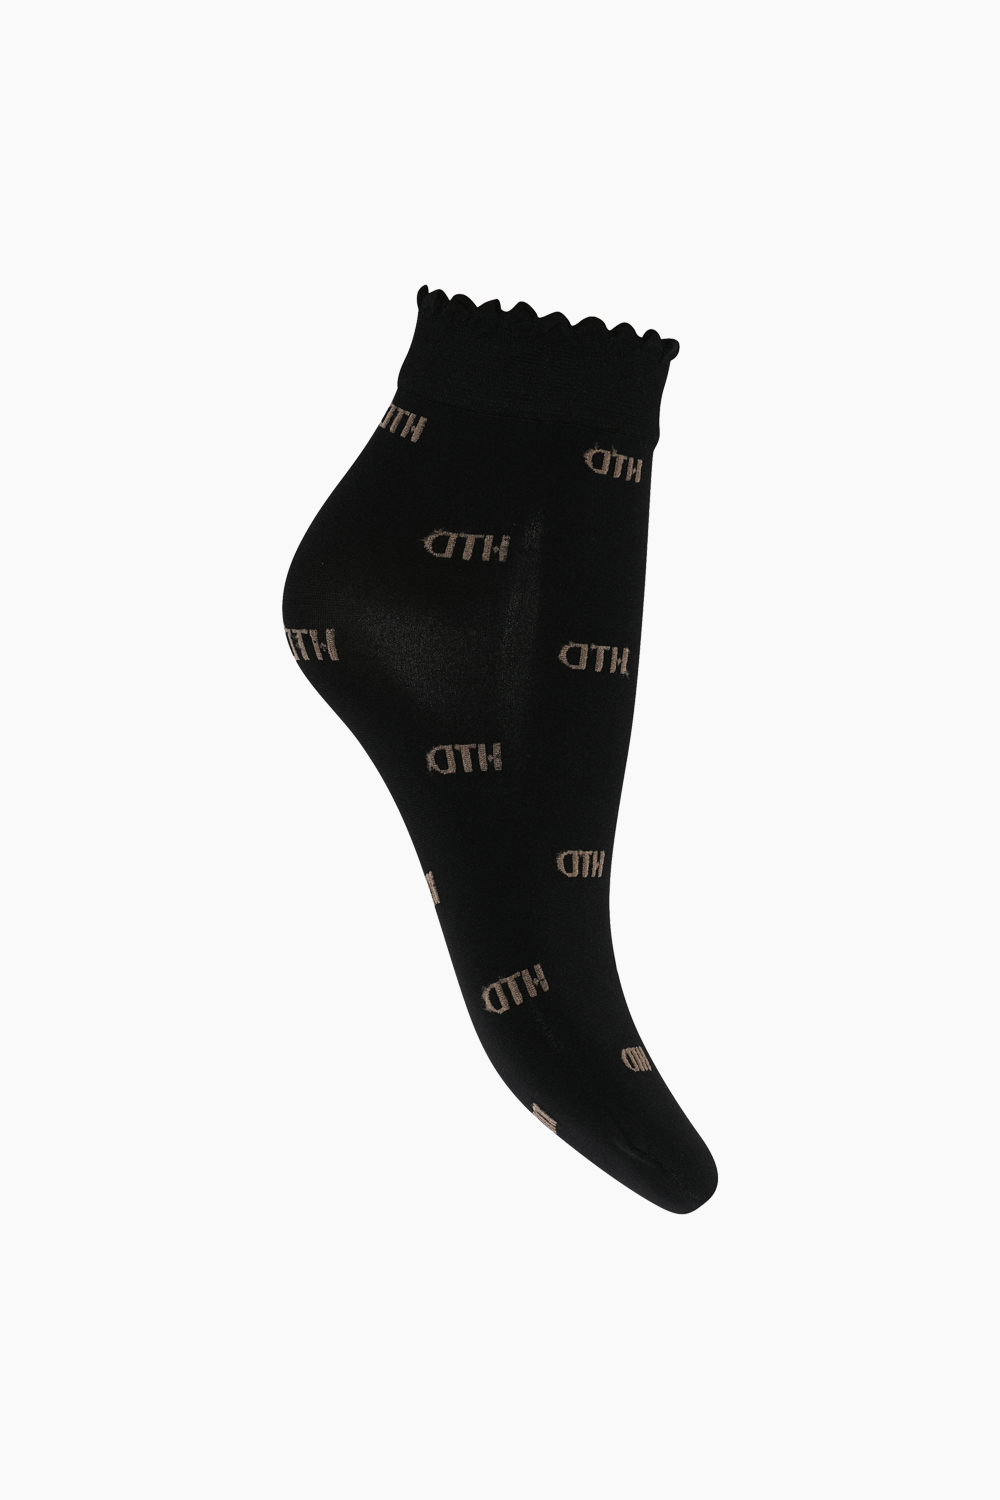 Fashion Socks 44853 - Black/Beige - Hype the Detail